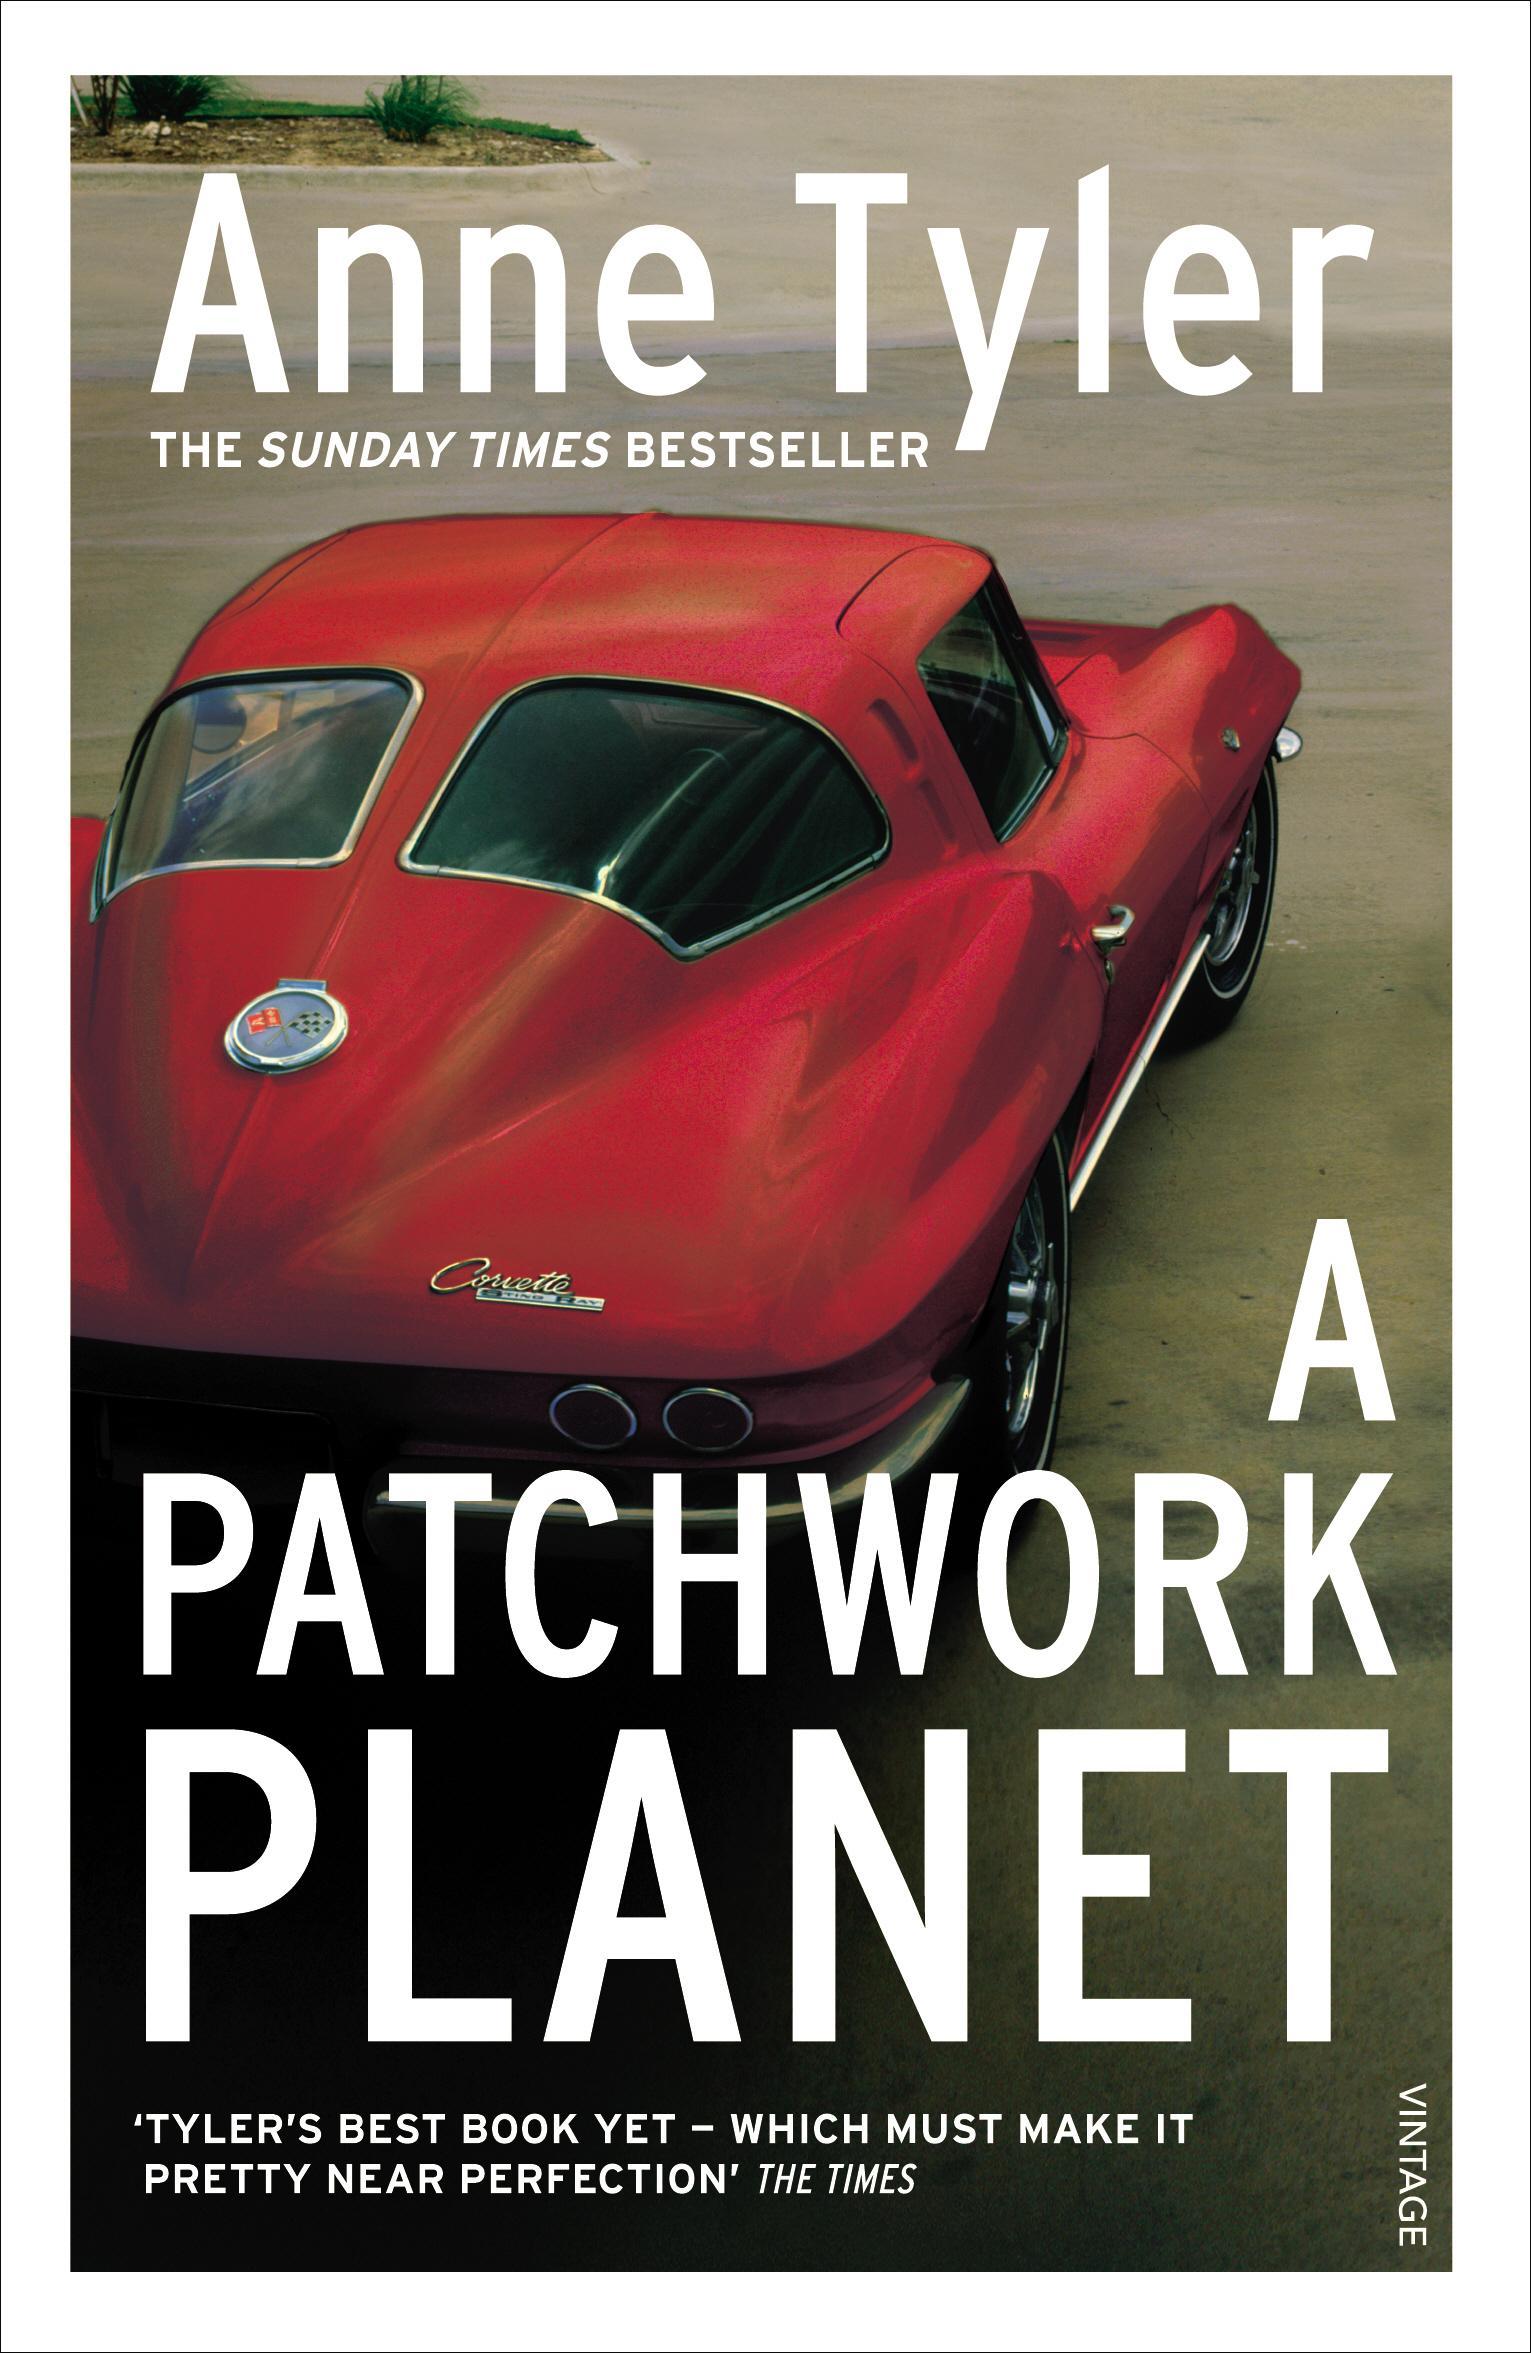 Patchwork Planet